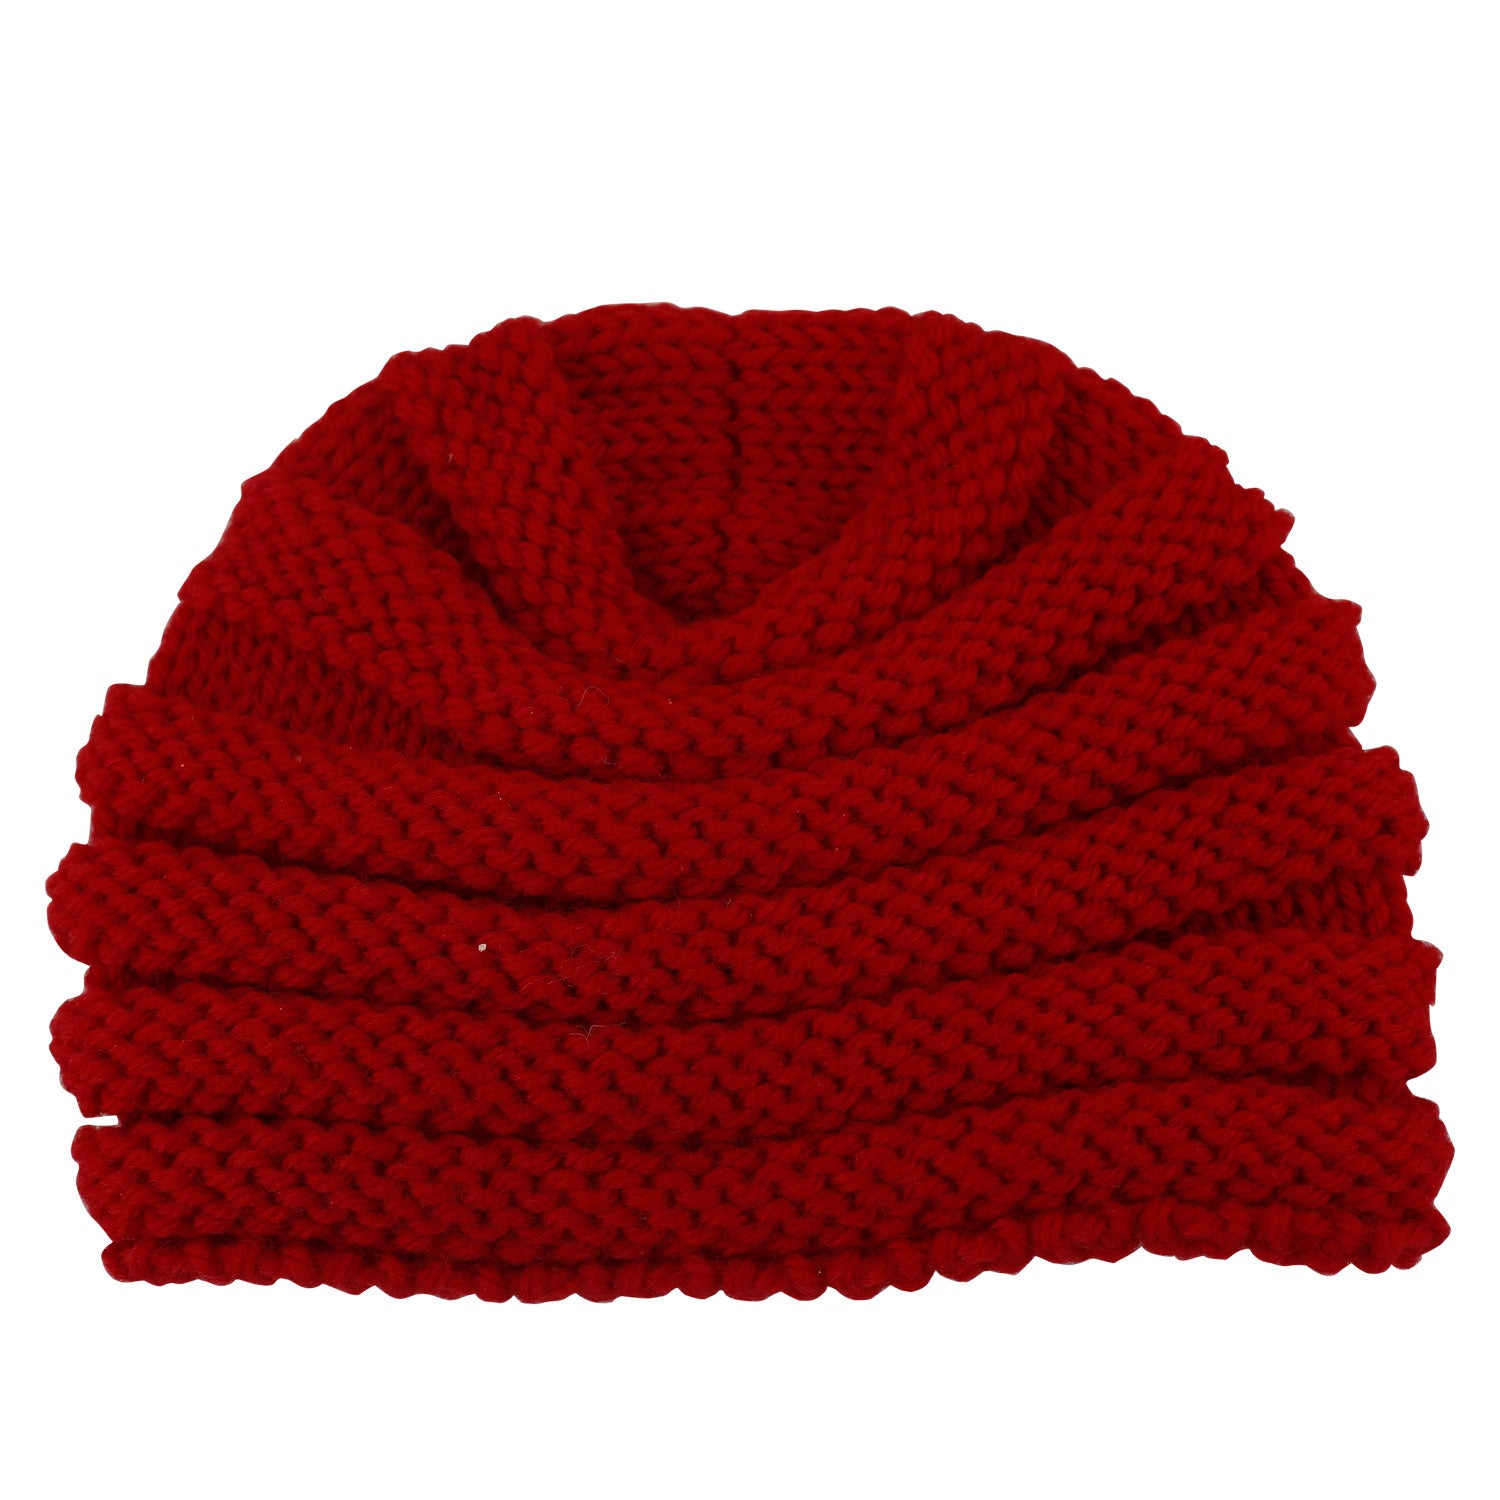 Partywear Red Turban Cap - Baby Moo